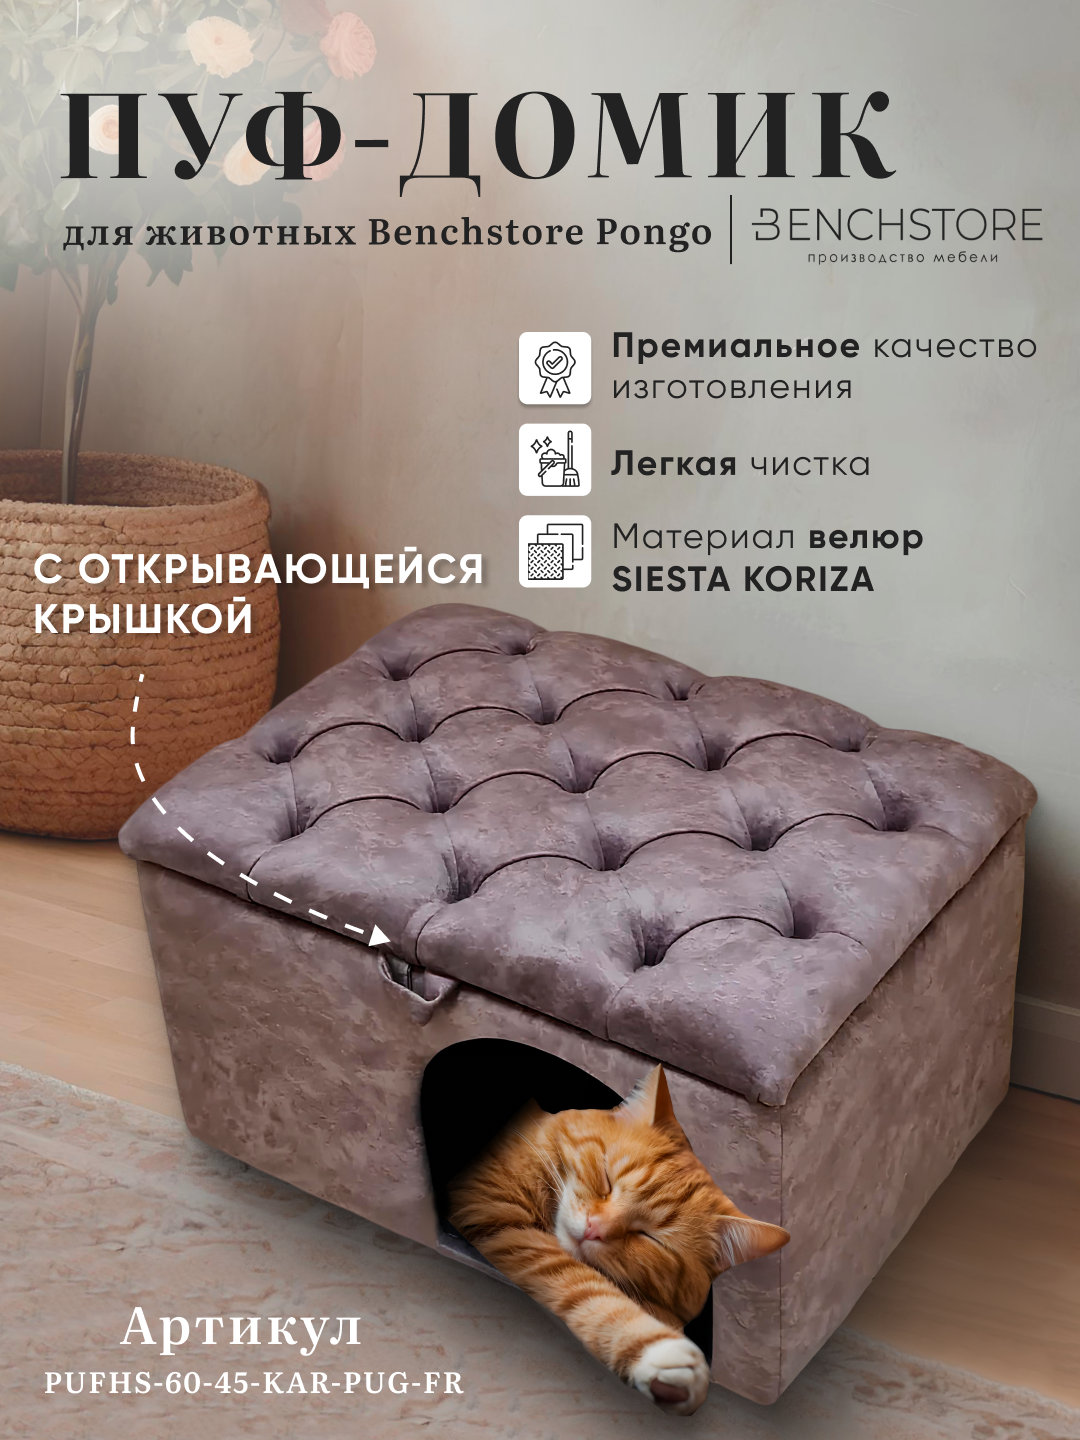 Пуф-домик для животных Benchstore Pongo, велюр Siesta Koriza, 60x45x44